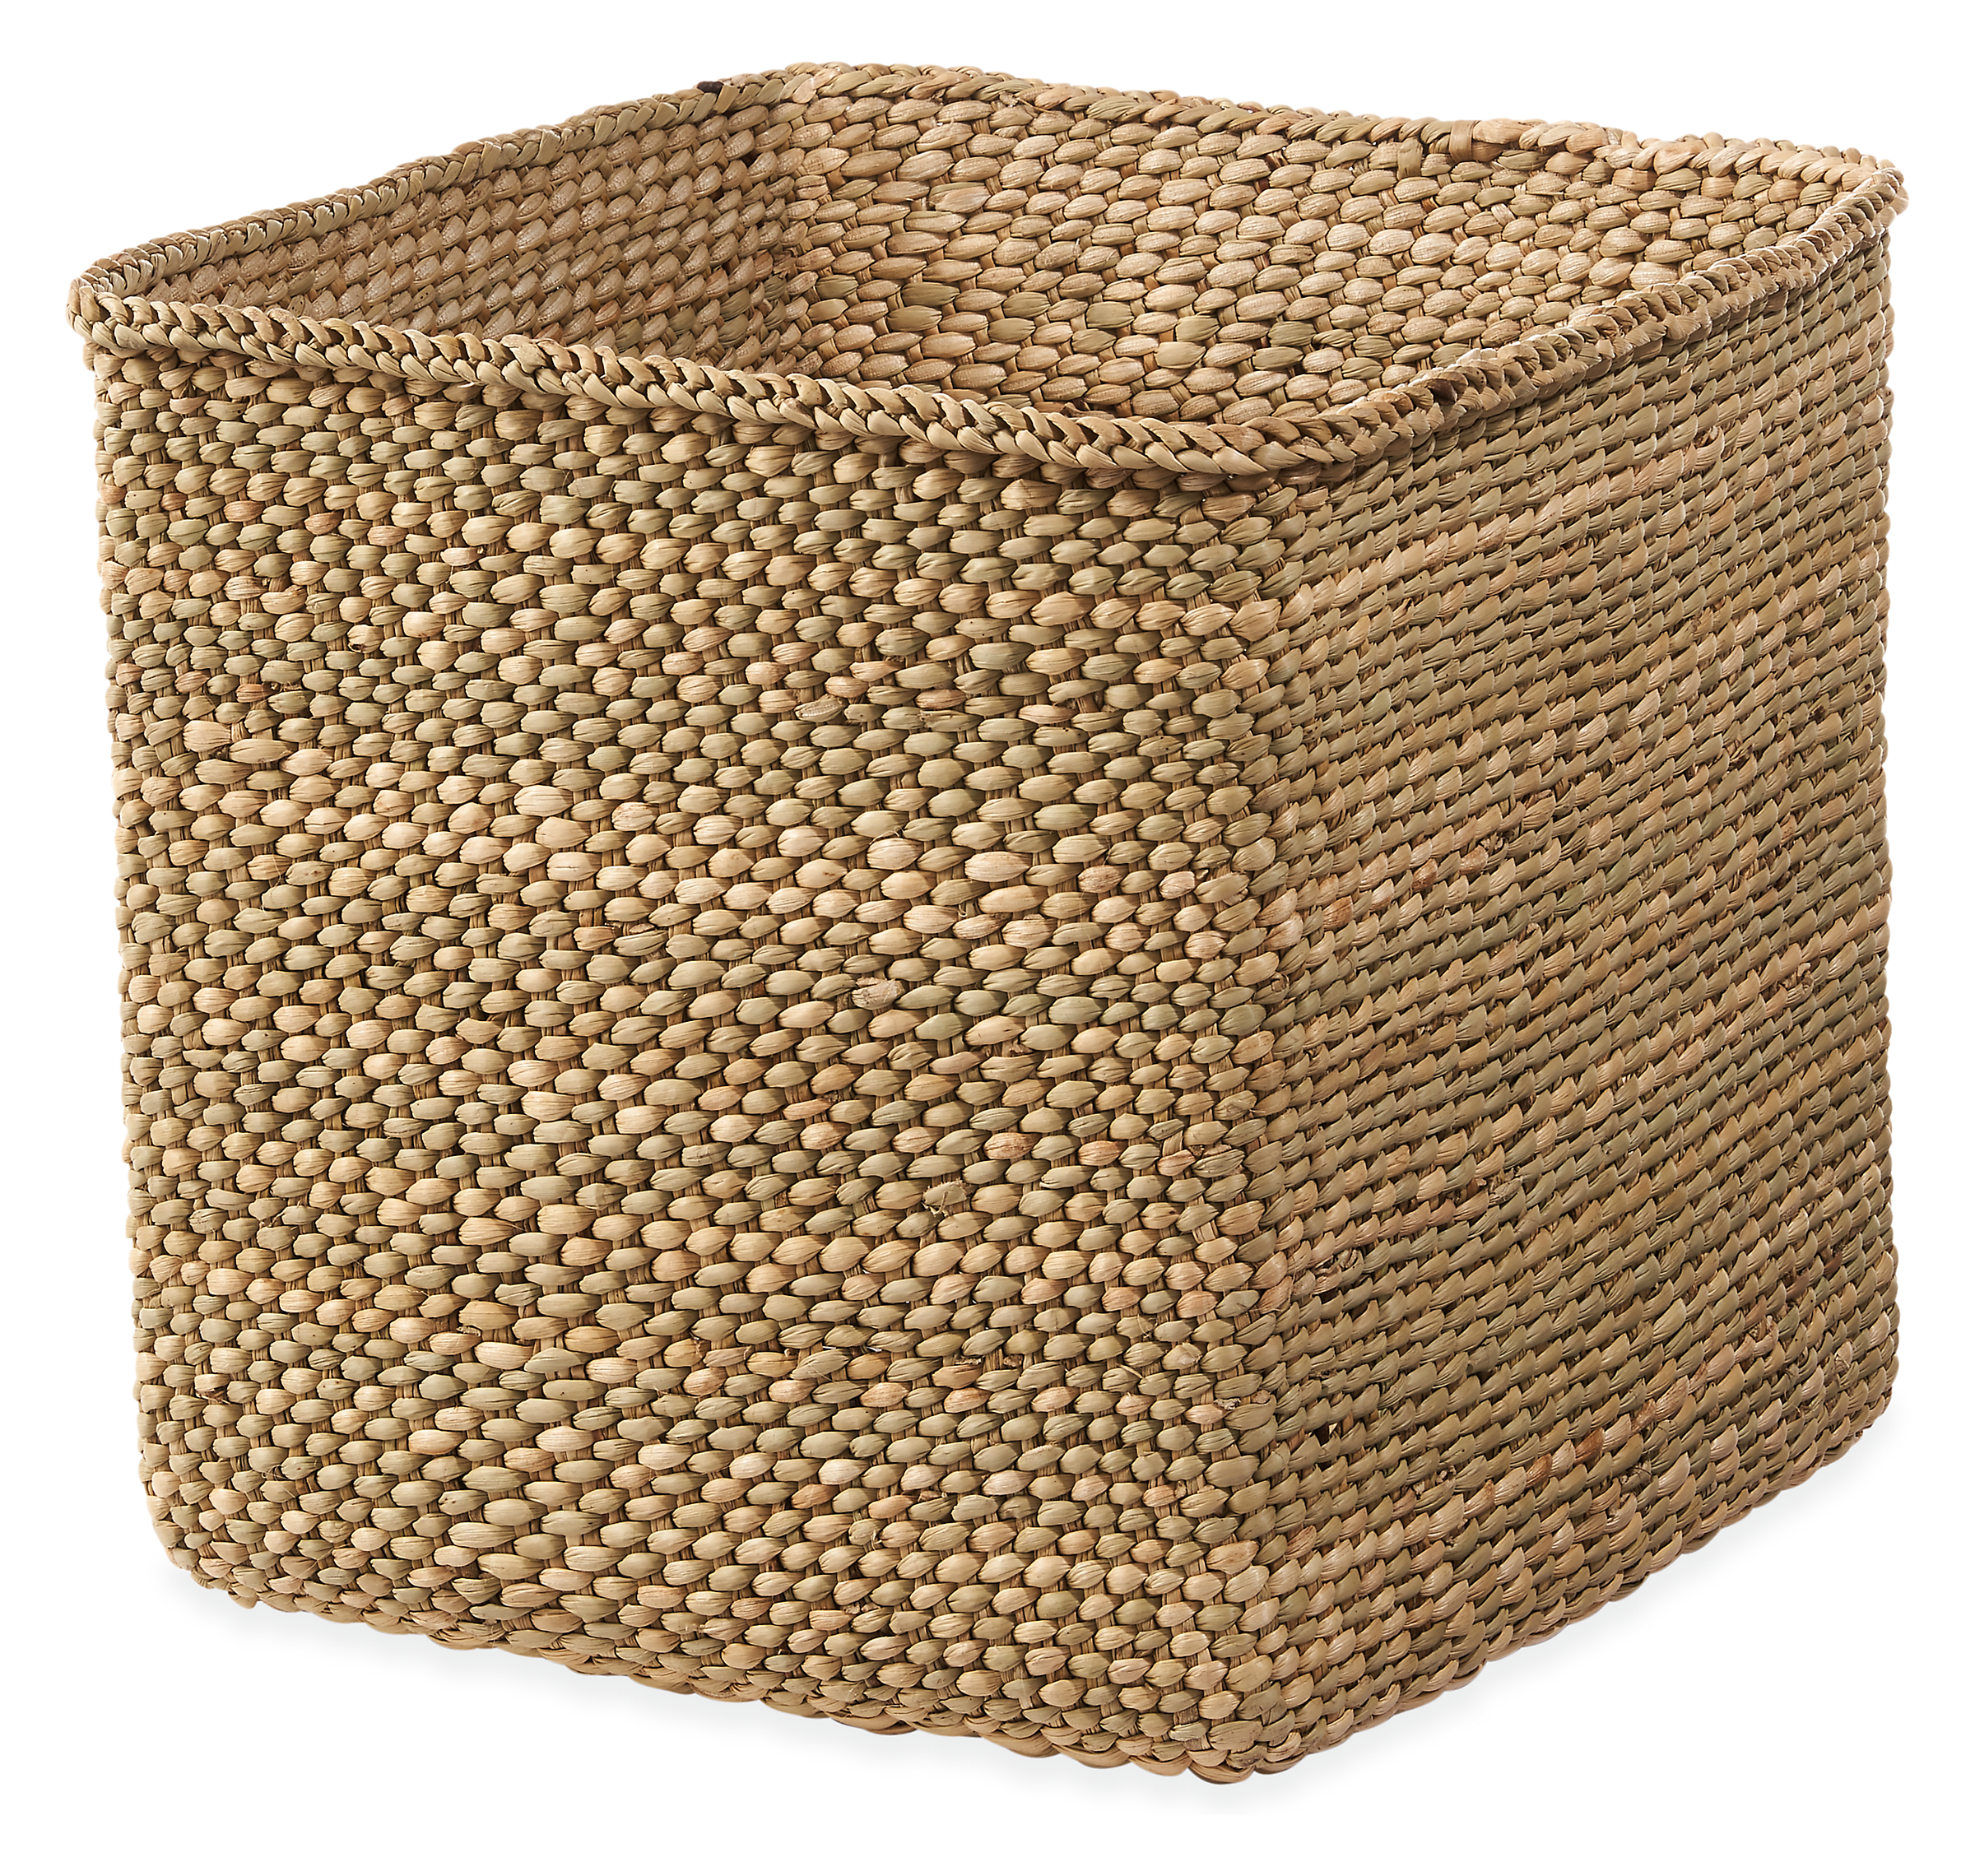 Iringa 10w 10d 10h Storage Basket